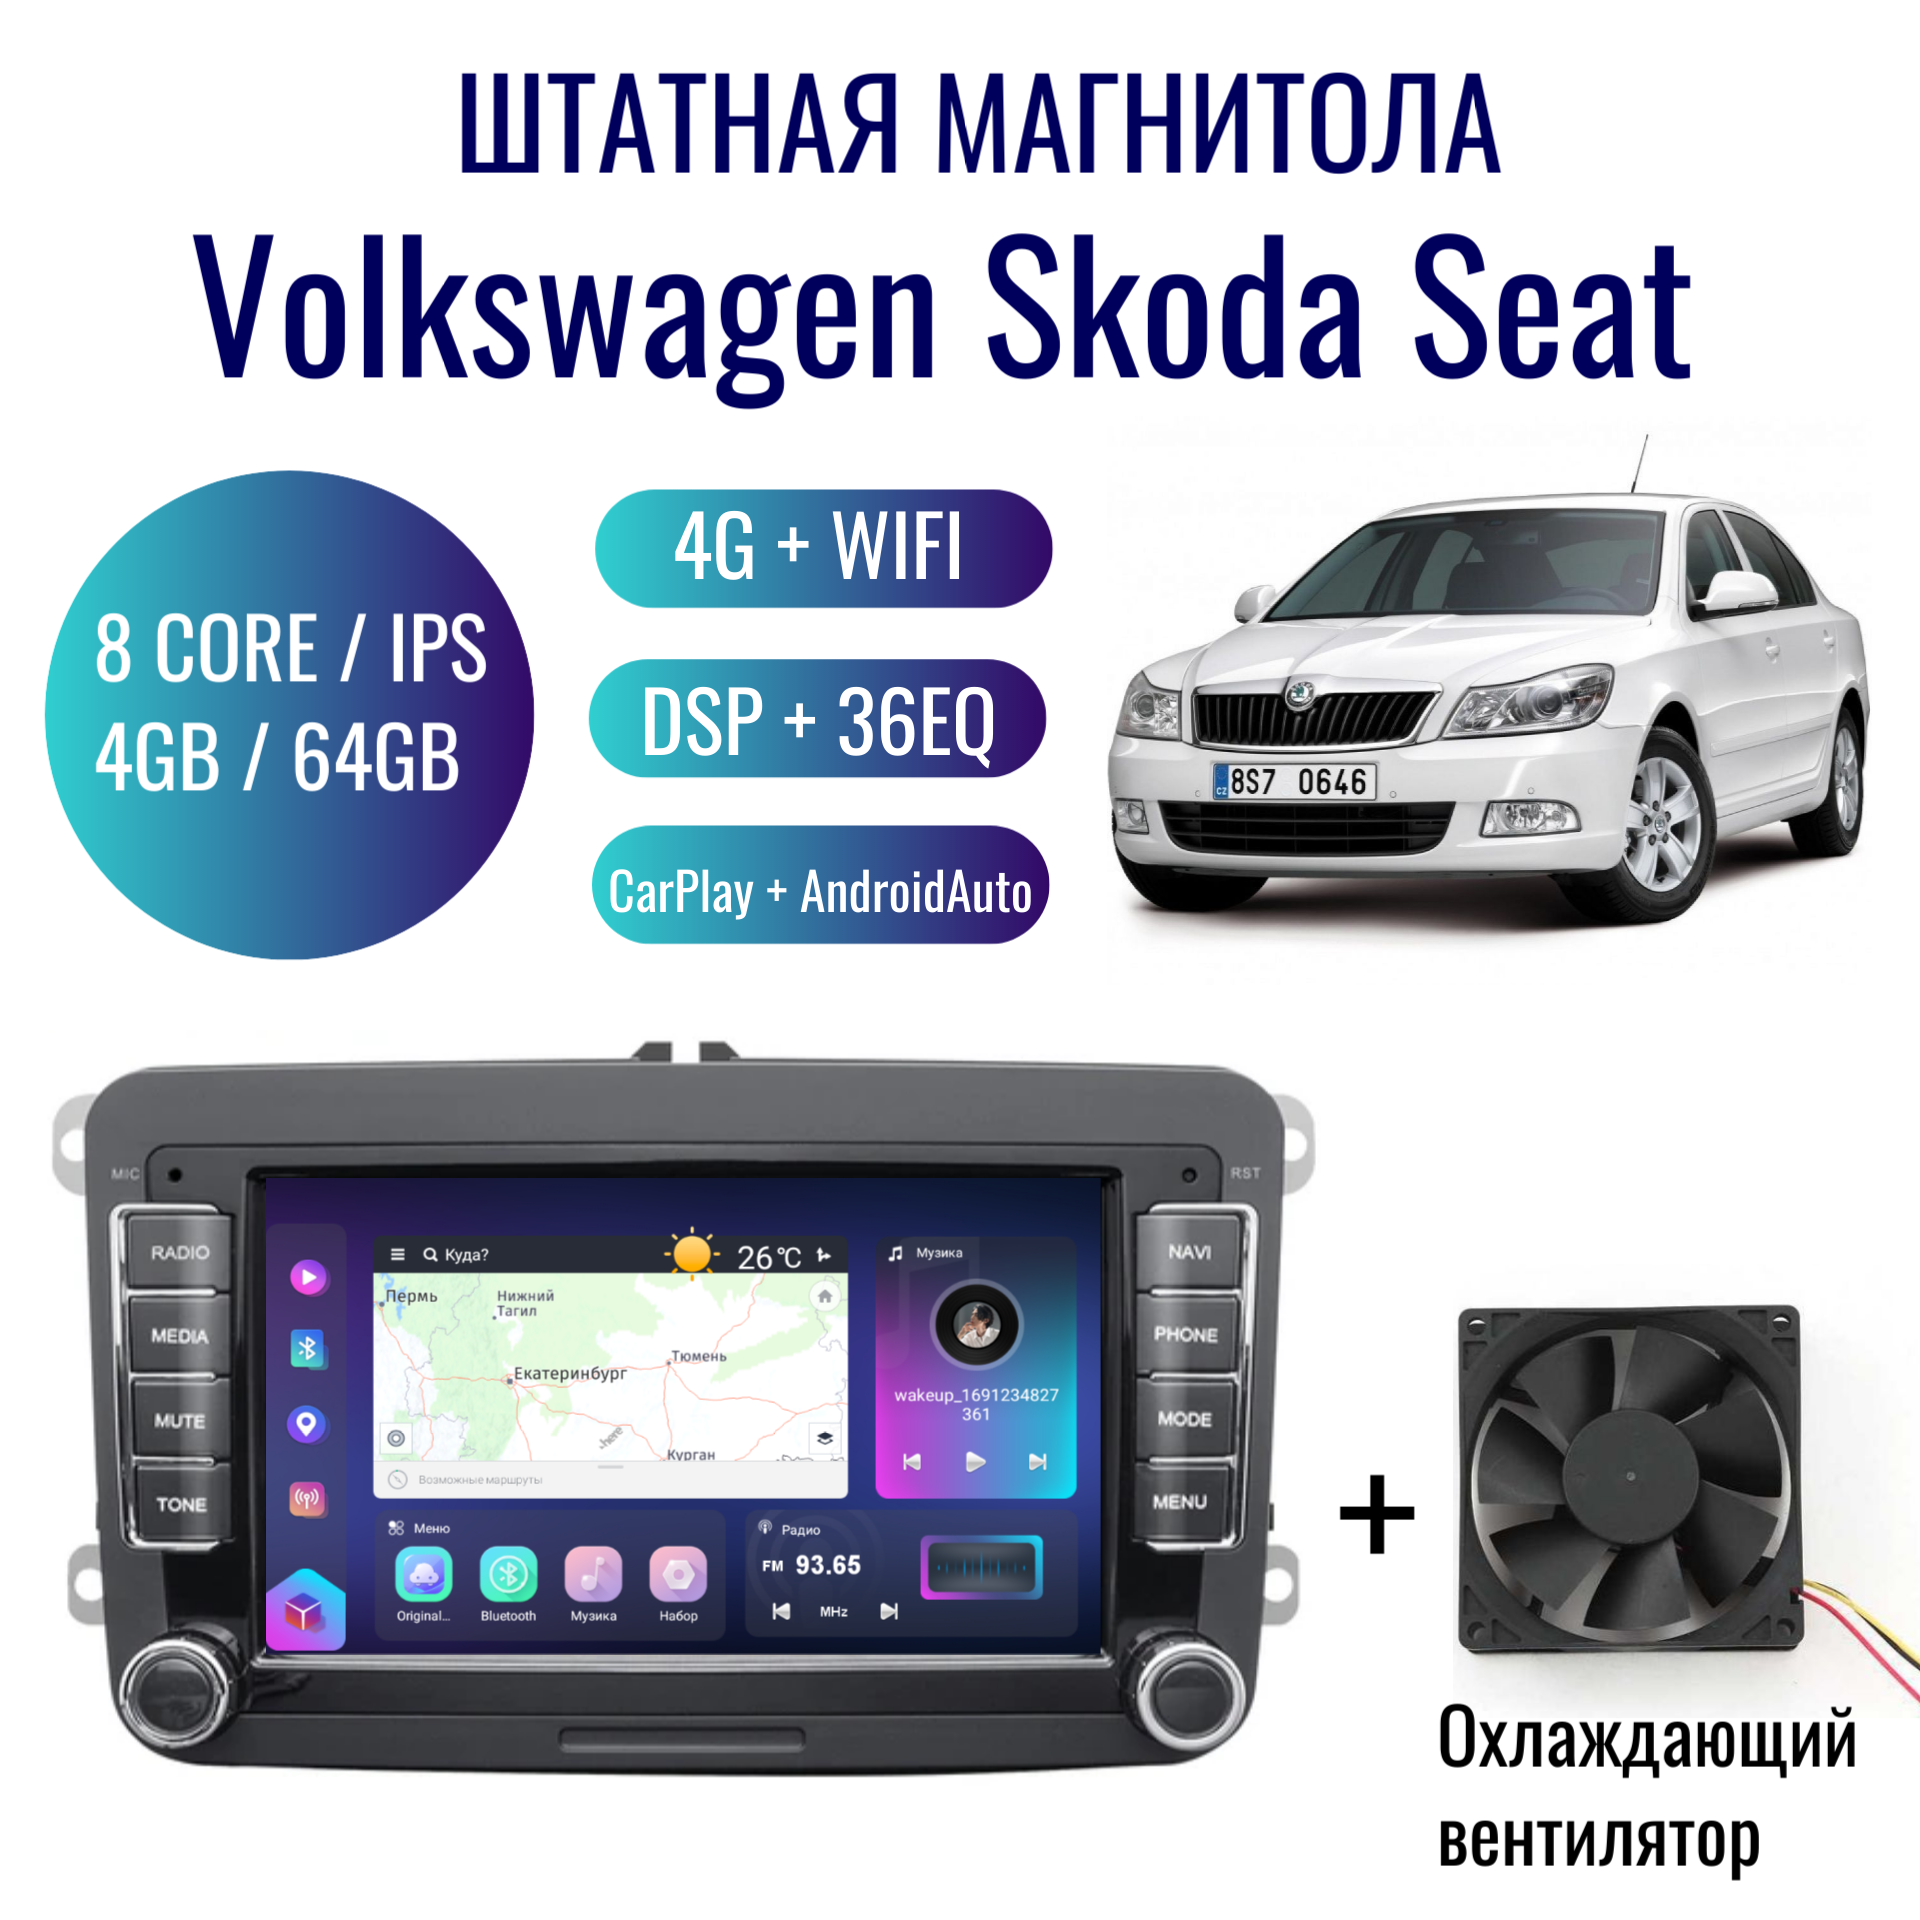 Штатная магнитола для автомобилей Volkswagen, Skoda, Seat на Android (4/64, 8 ядер, GPS, WIFI, CarPlay, Android Auto, DSP, 36EQ, навигатор)